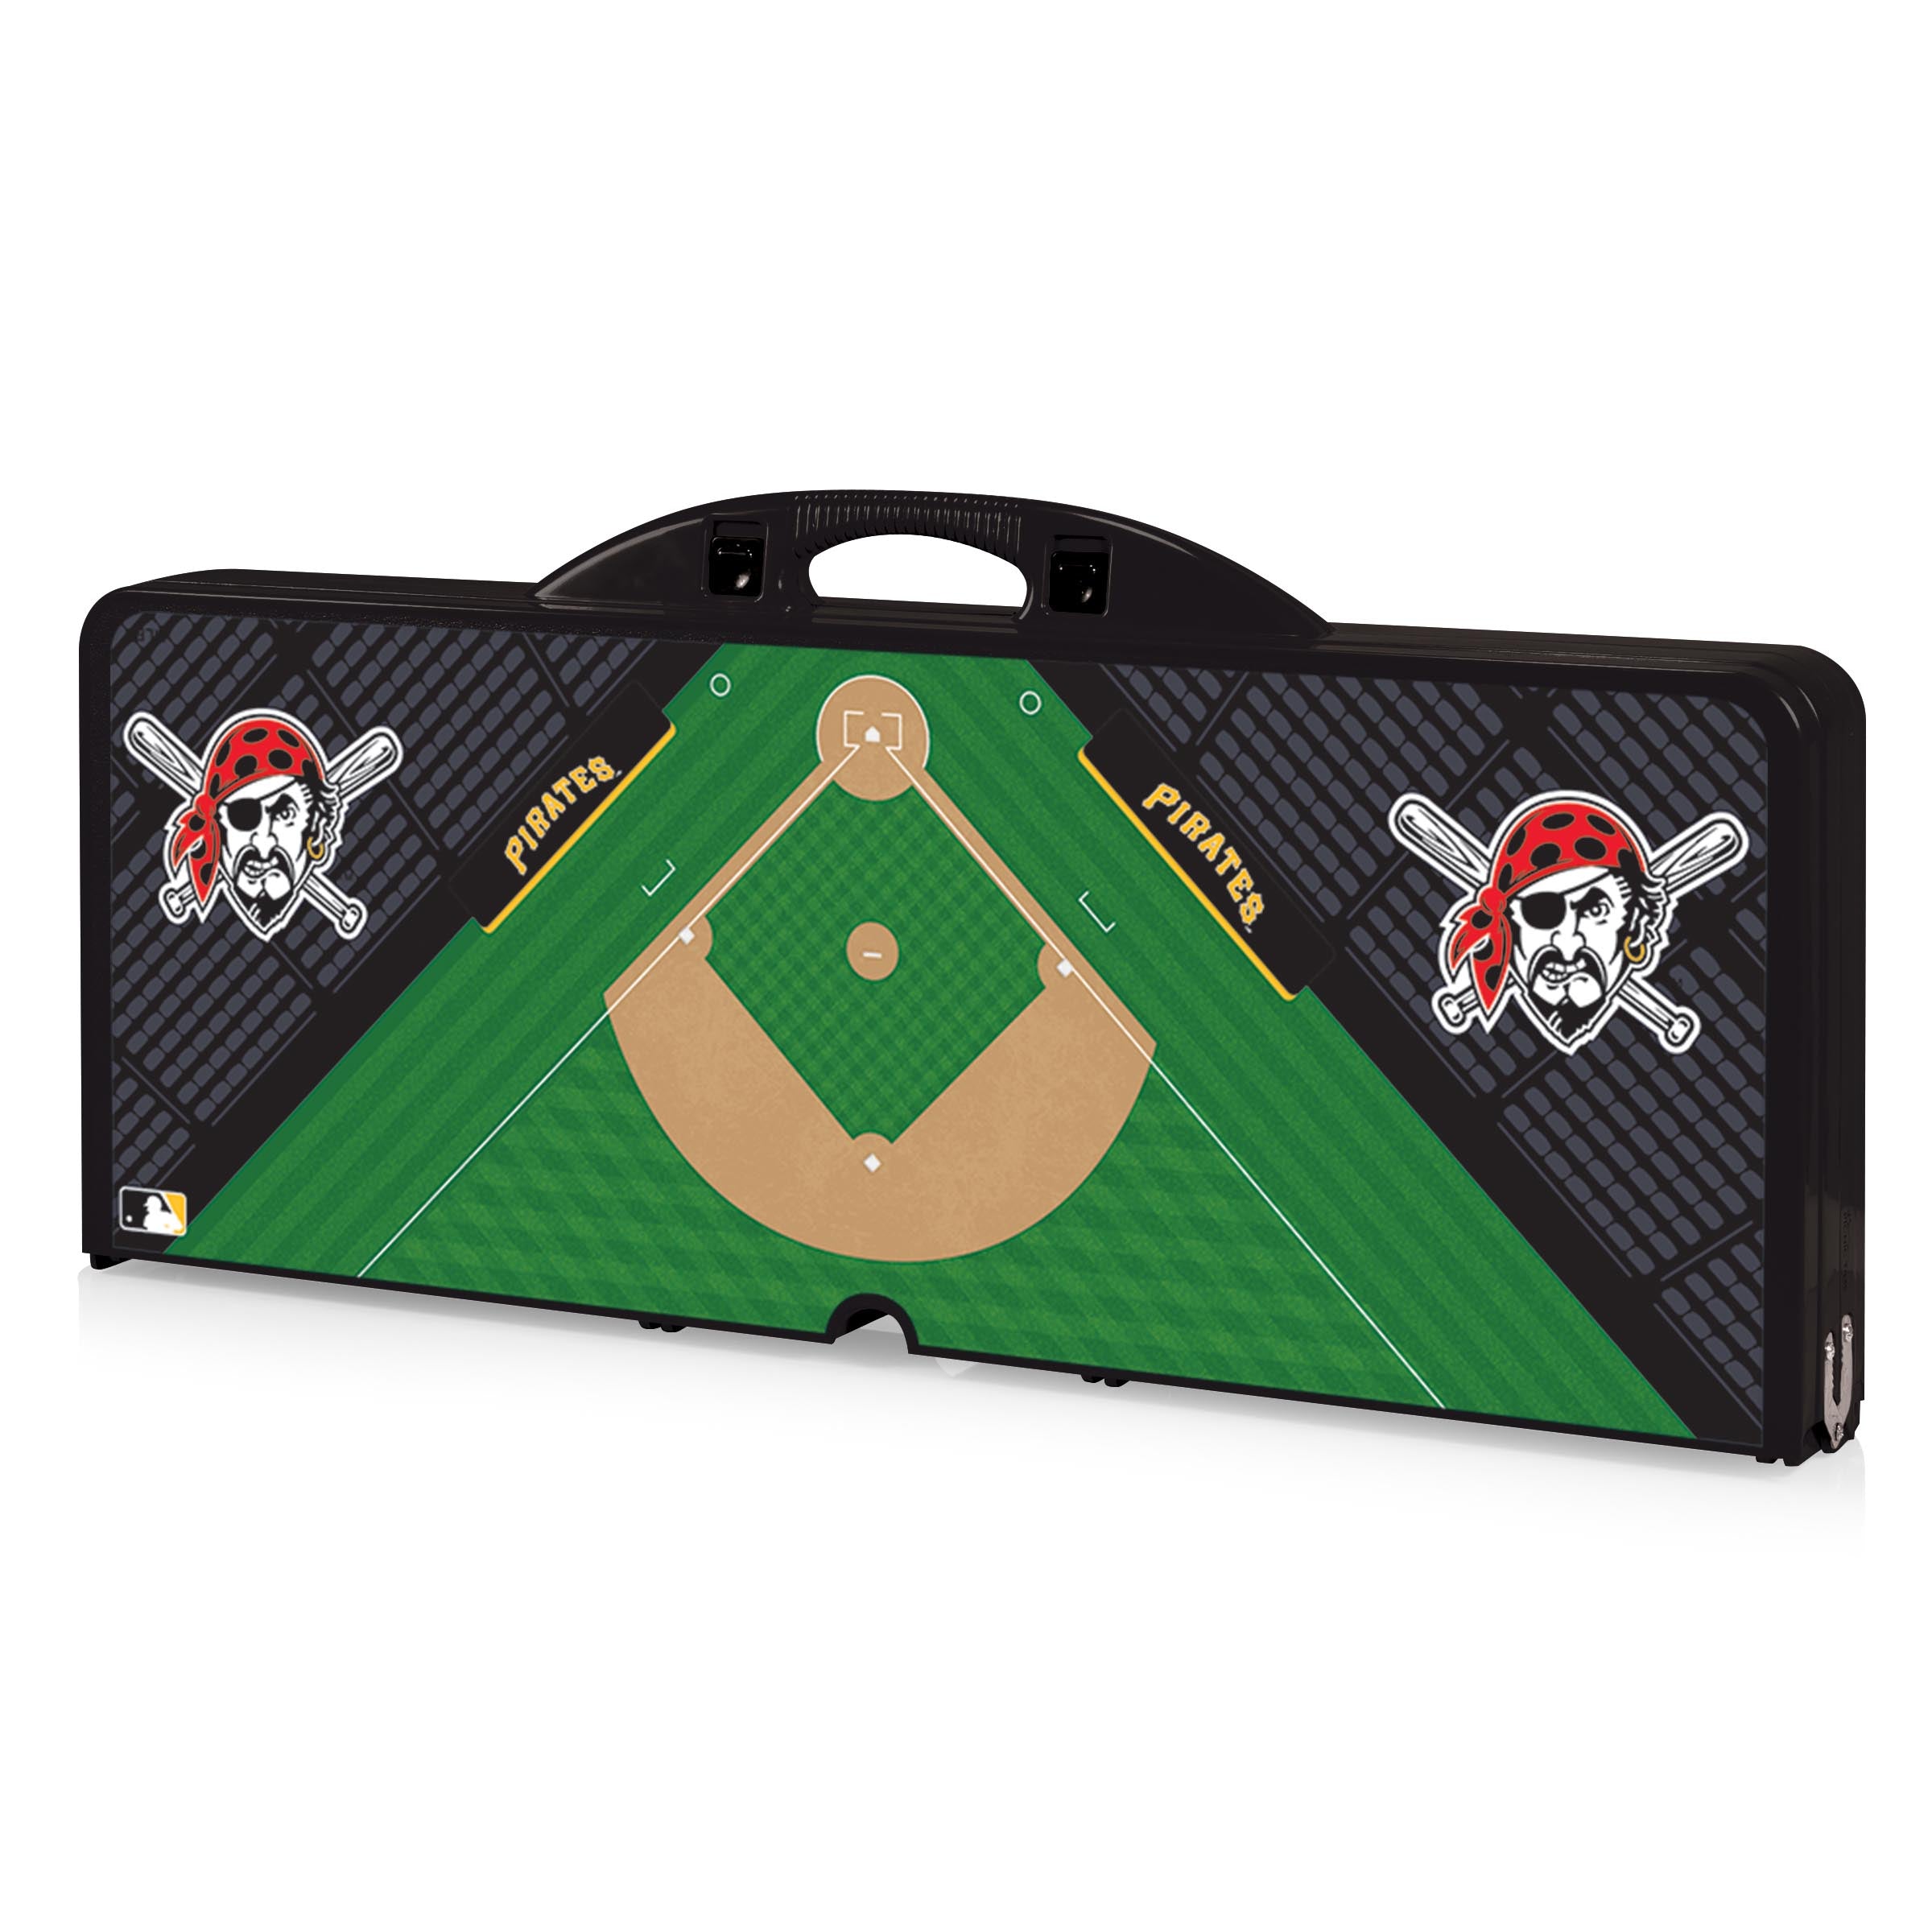 Pittsburgh Pirates Baseball Diamond - Picnic Table Portable Folding Table with Seats